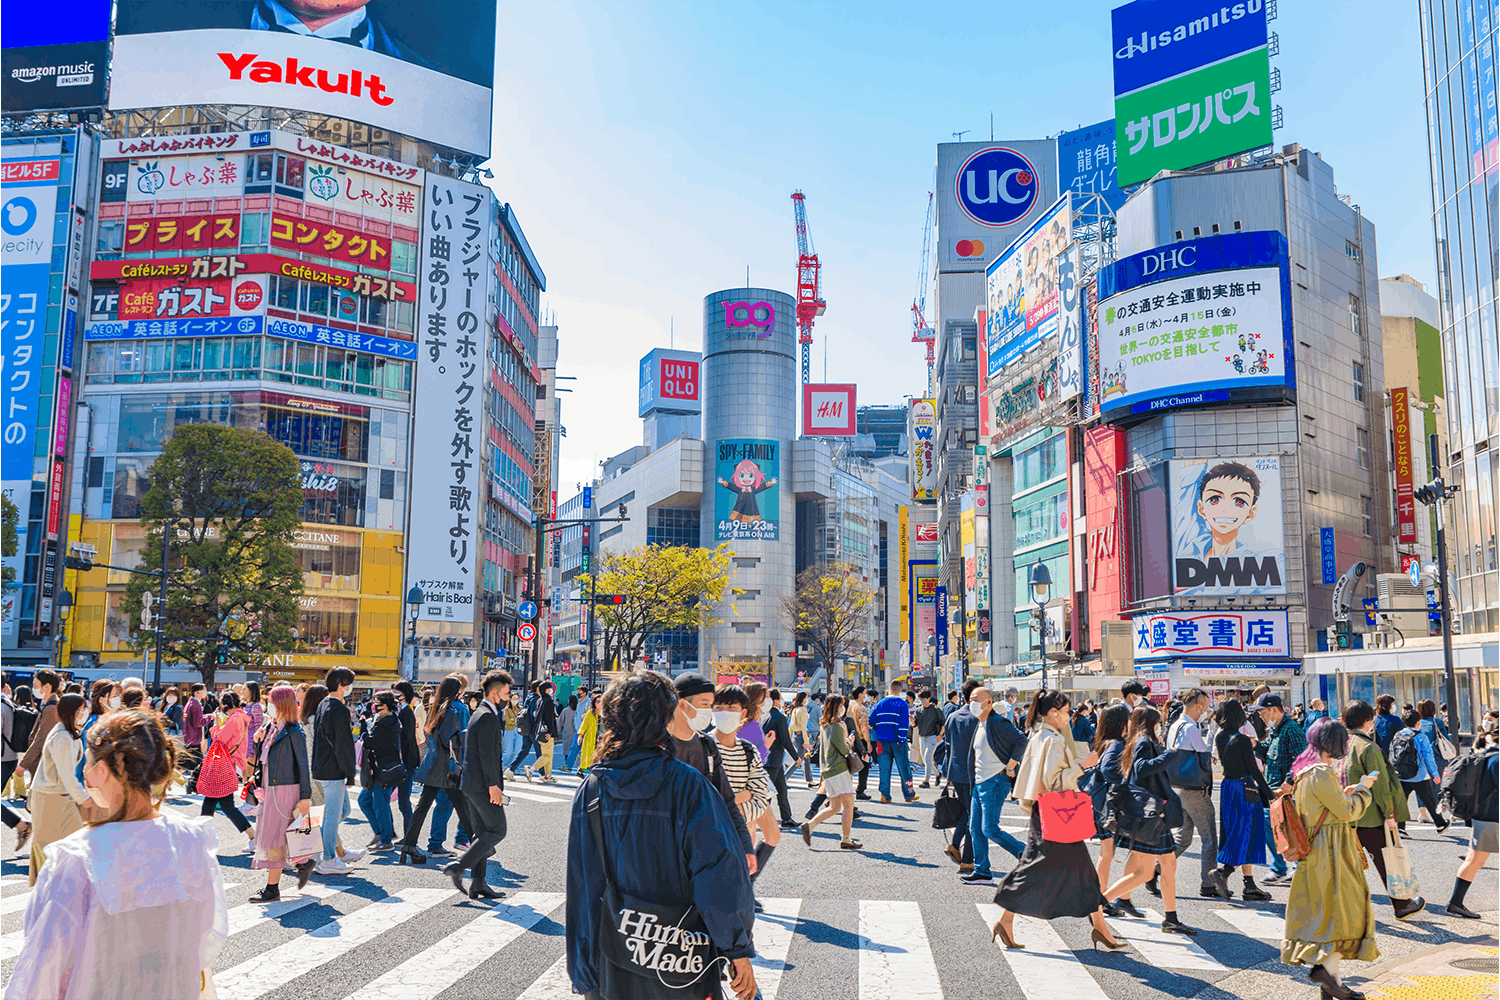 A street view of Shibuya Scramble Crossing in Tokyo, Japan.